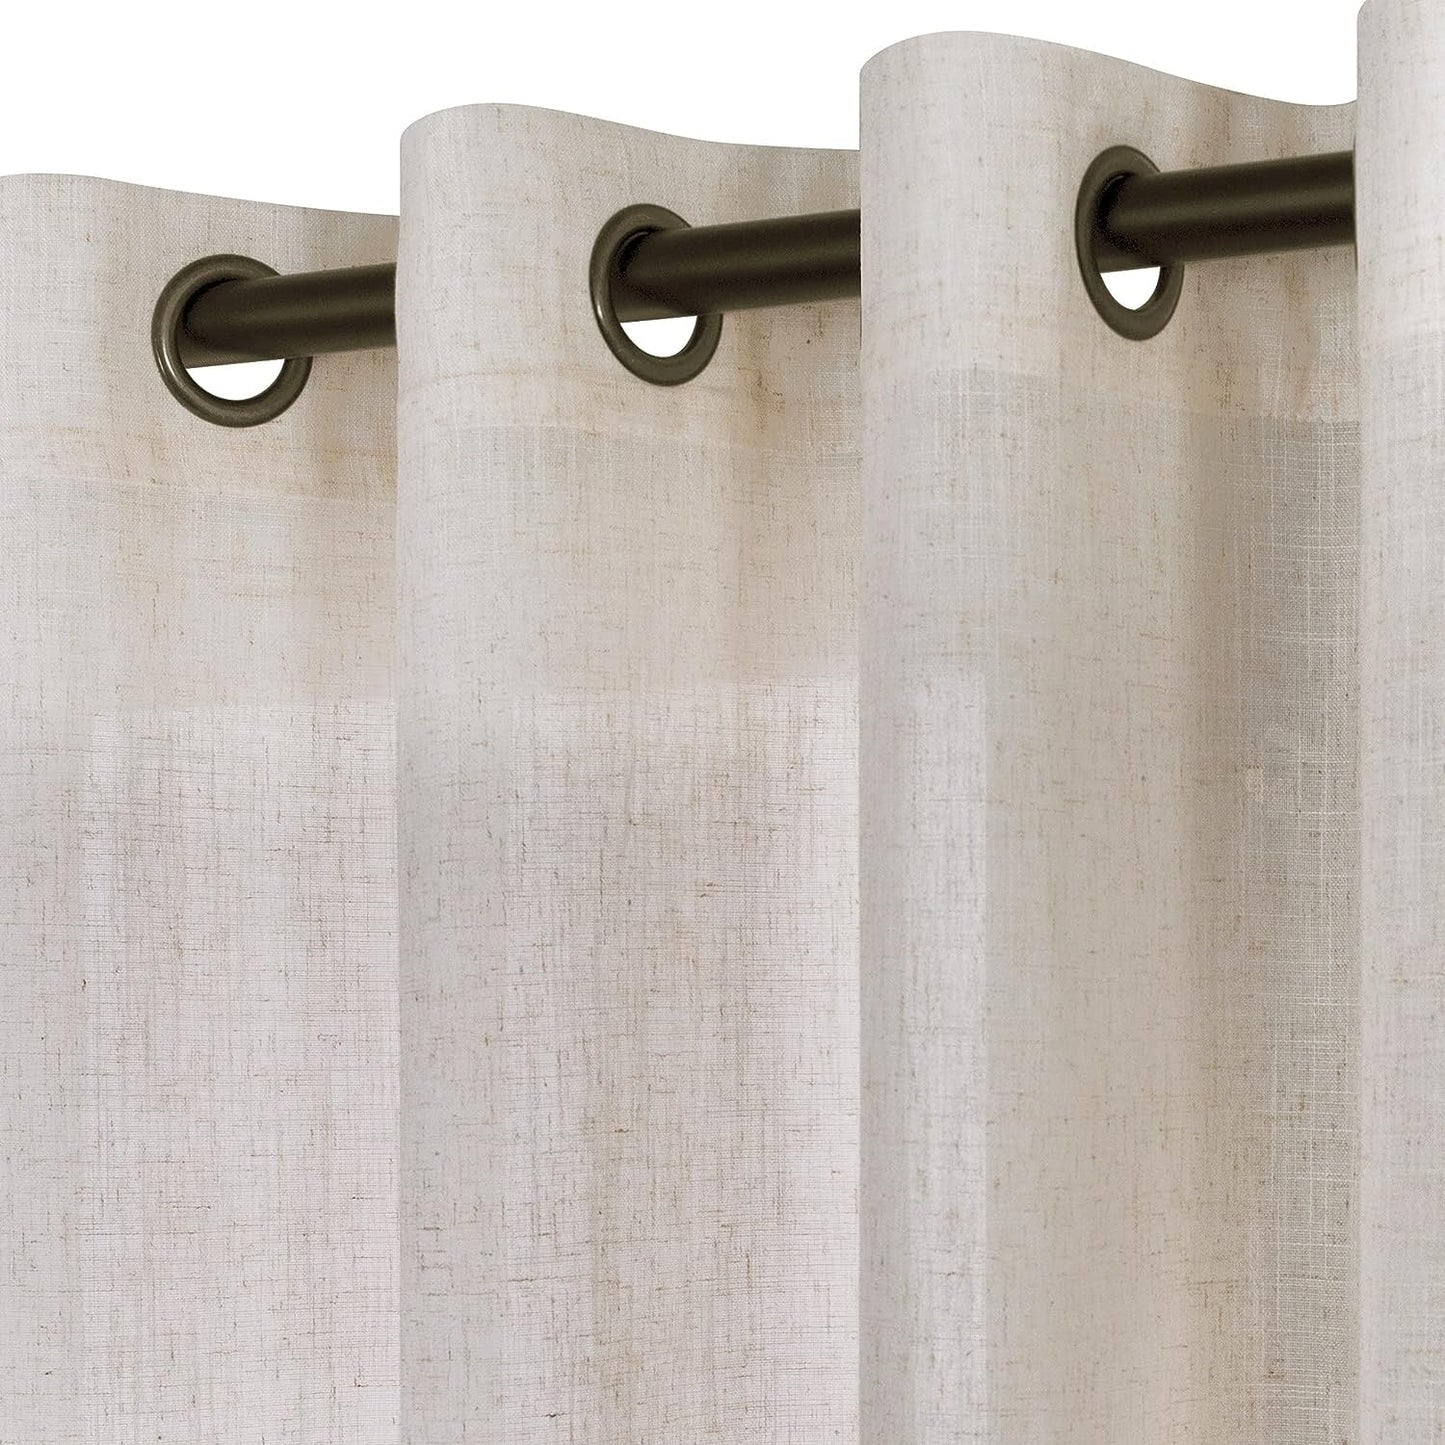 KOUFALL Linen Grommet Curtains for Living Room,Semi Sheer Boho Farmhouse Neutral Cream Curtain Drapes with Bronze Grommets,Room Curtains for Bedroom Window Set of 2 Panels 84 Length  KOUFALL TEXTILE Linen 52X84 